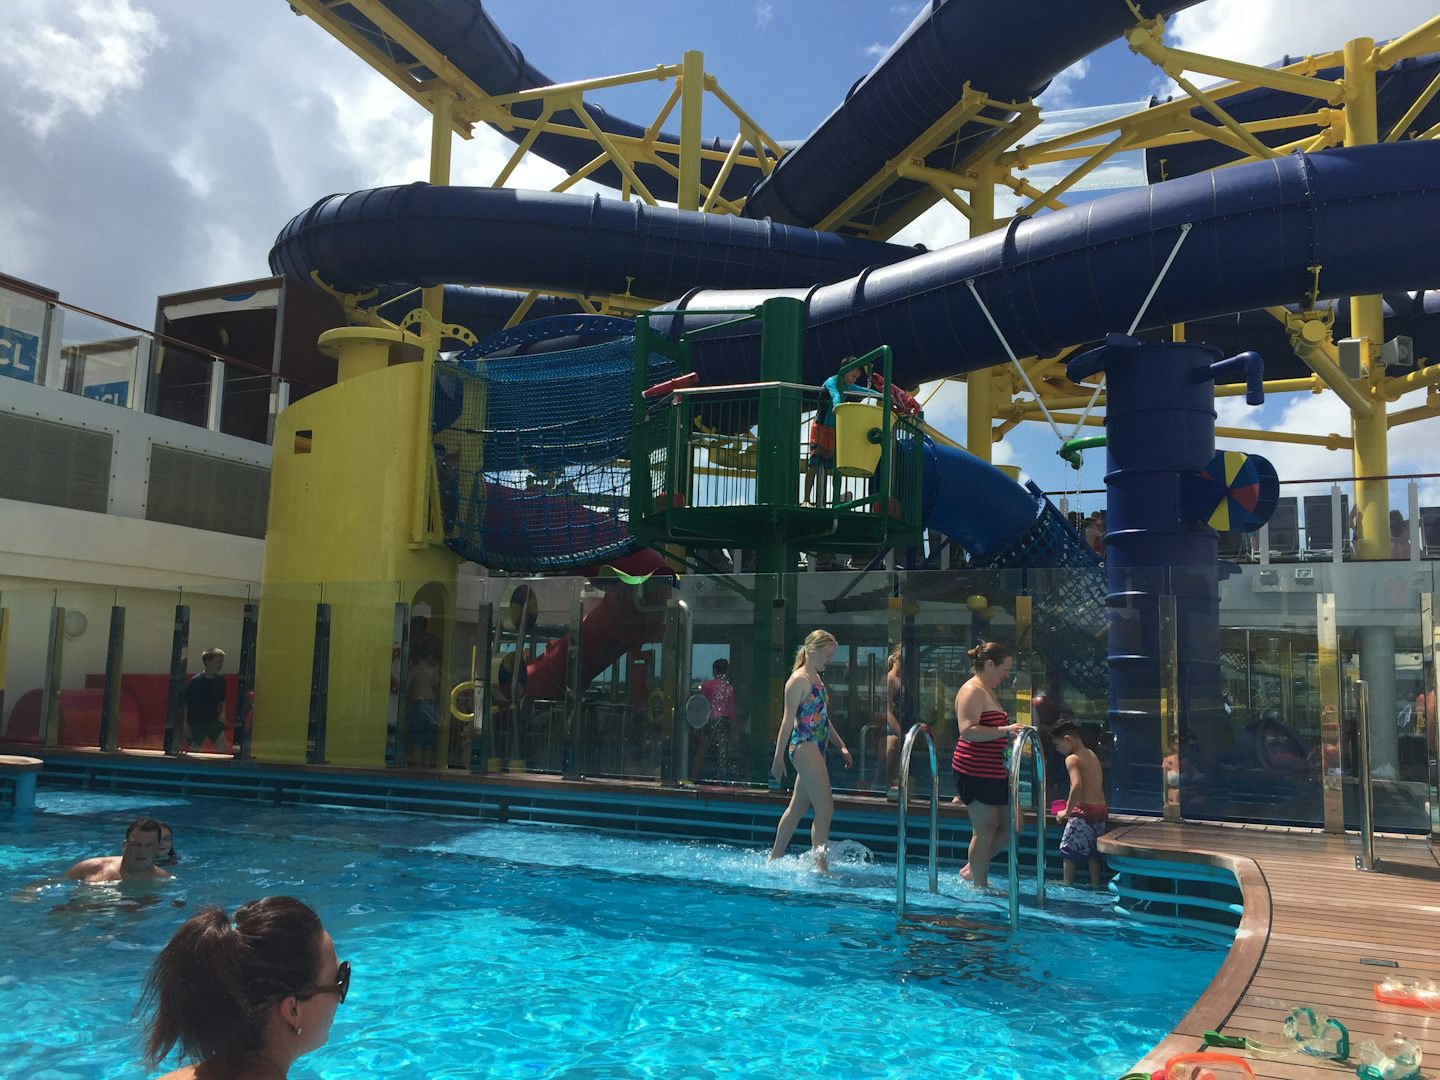 Kids pool and water slide!